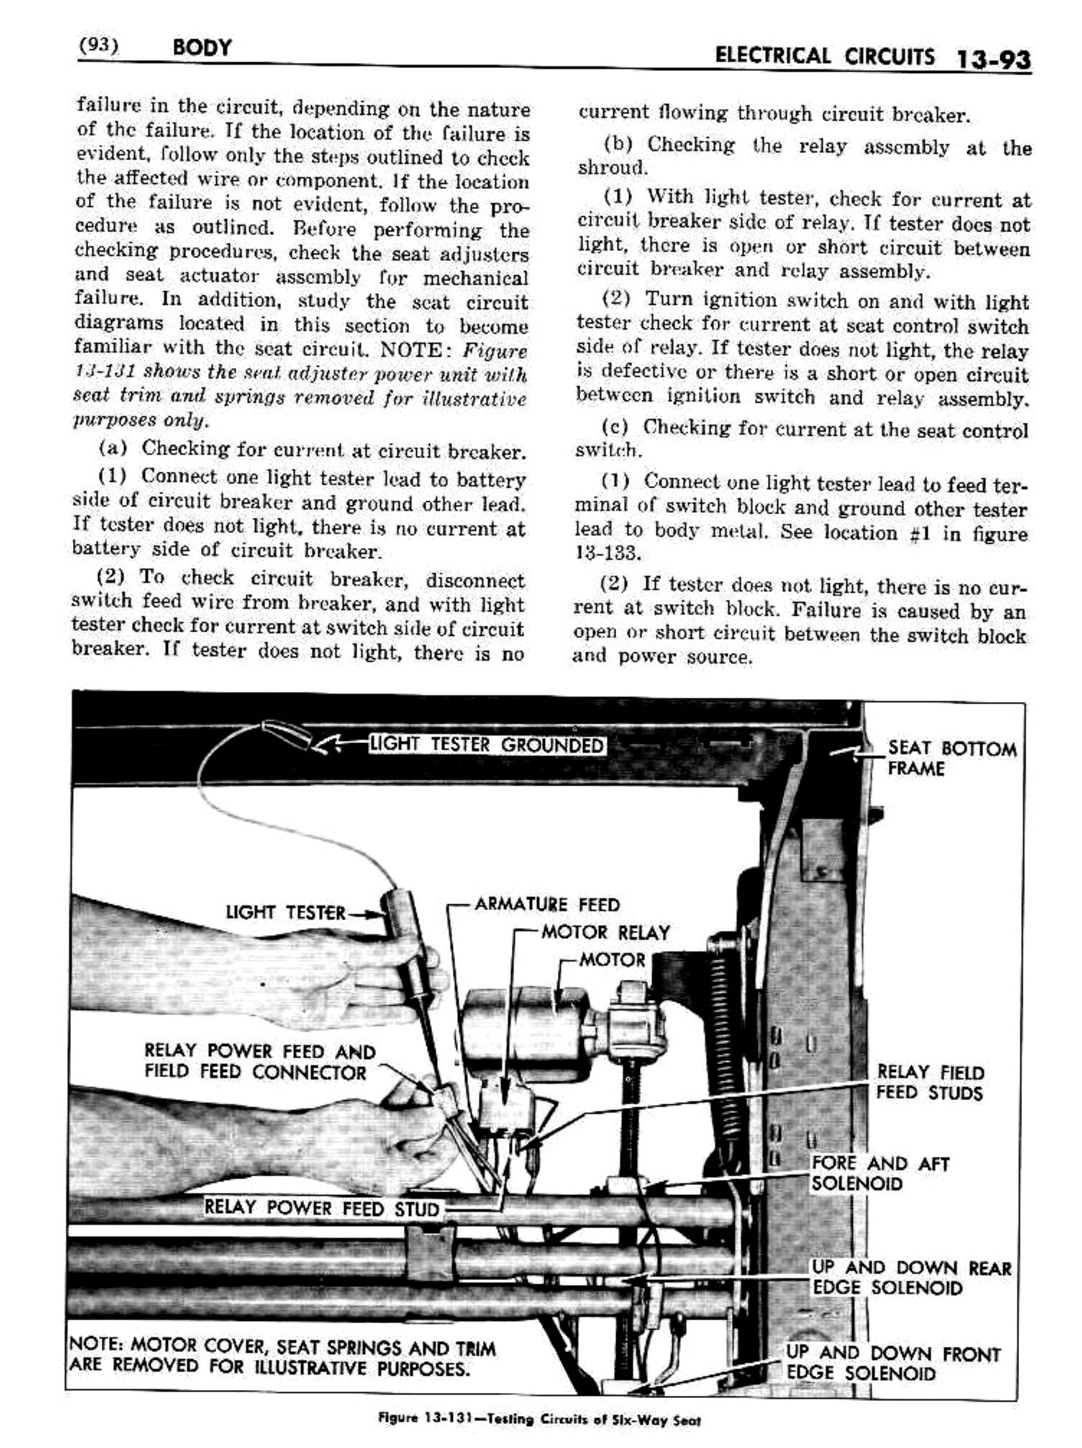 n_1958 Buick Body Service Manual-094-094.jpg